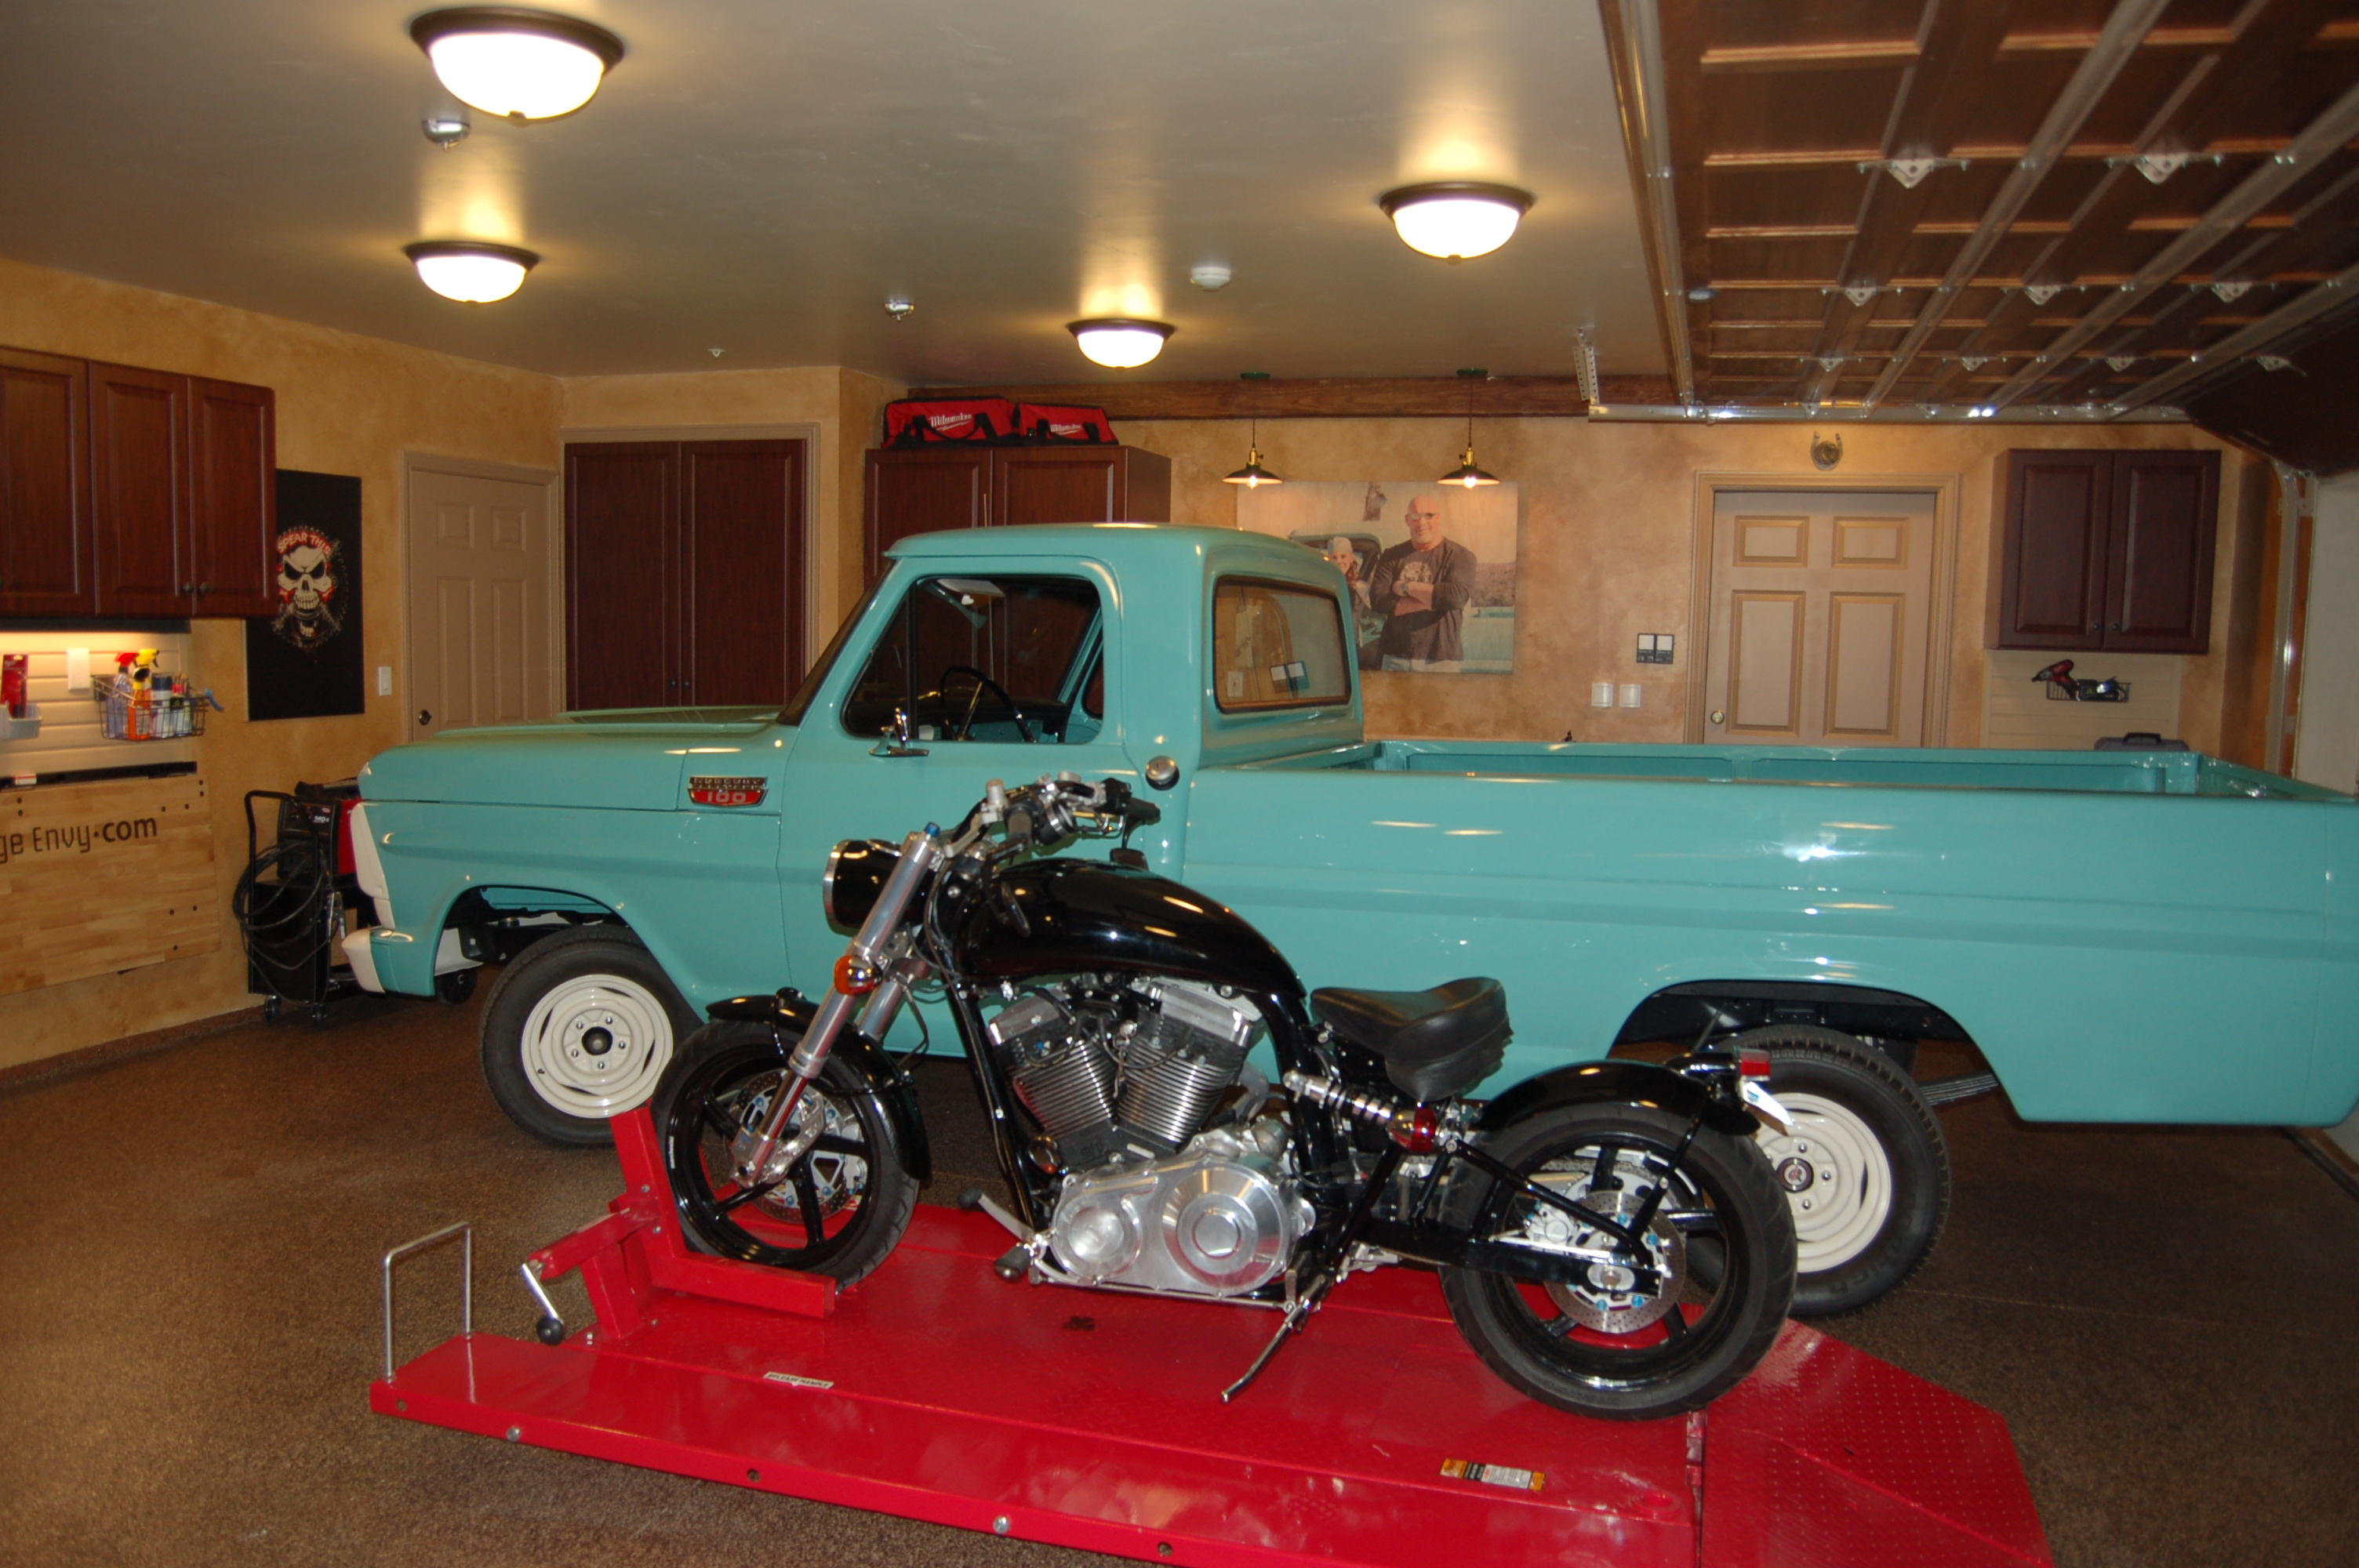 Bill Goldberg's garage setup, featuring the RML-600 Motorcycle Lift by Ranger